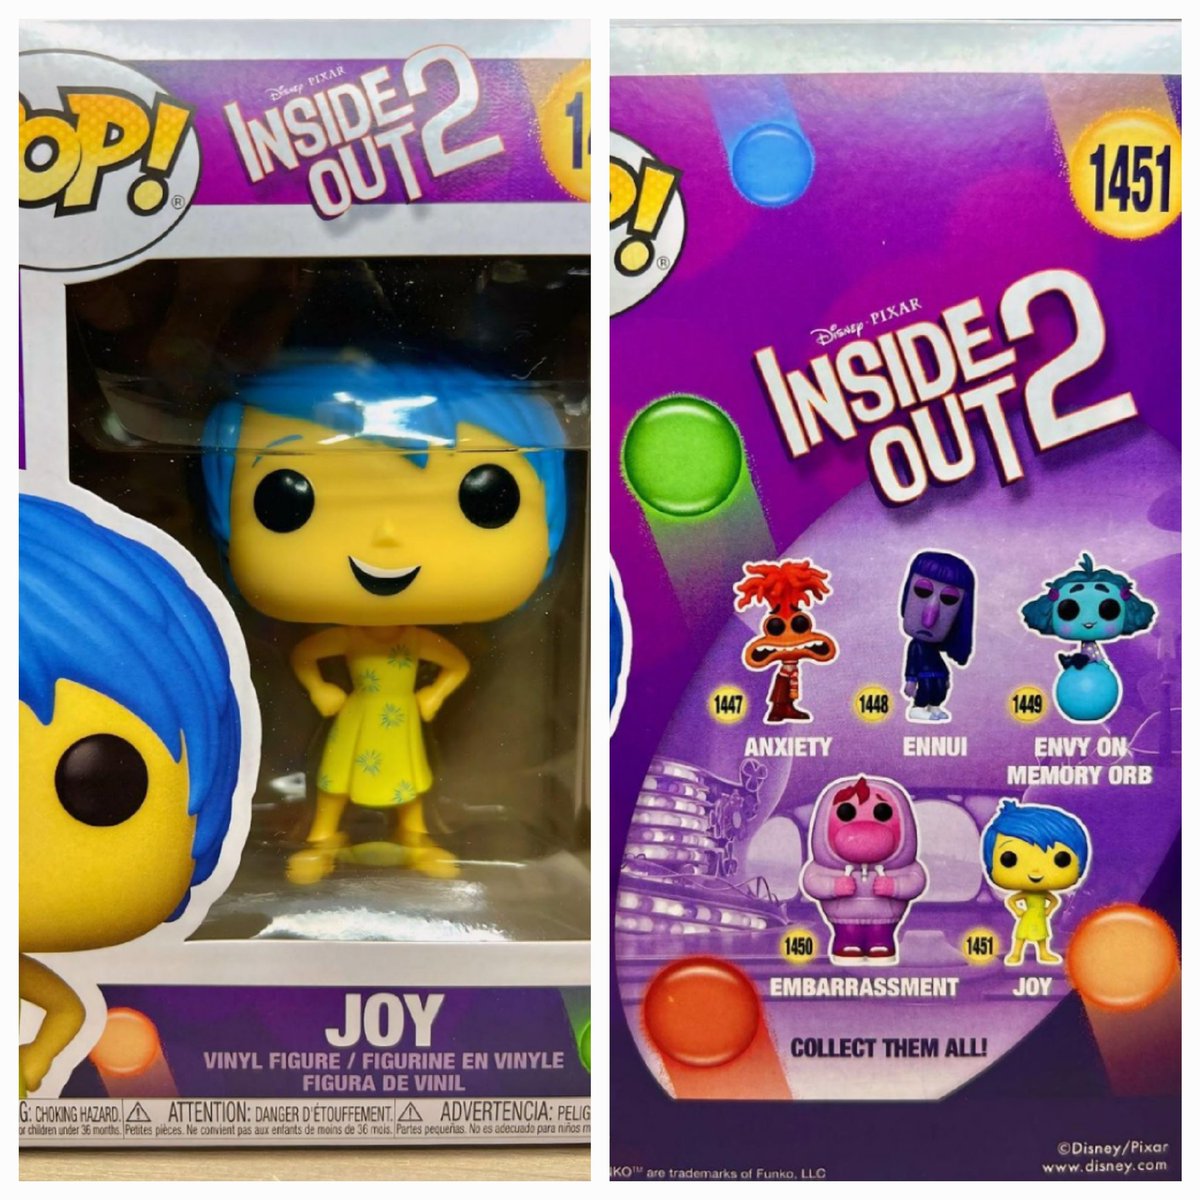 First, look at Inside Out 2 Funko Pops!

Credit @omgfunkos 
-
#funko #funkopop #funkopopcollection #funkoaddict #funkopops #funkocollector #anime #manga #funkofamily #skittlerampage #insideout2 #disney #Pixar